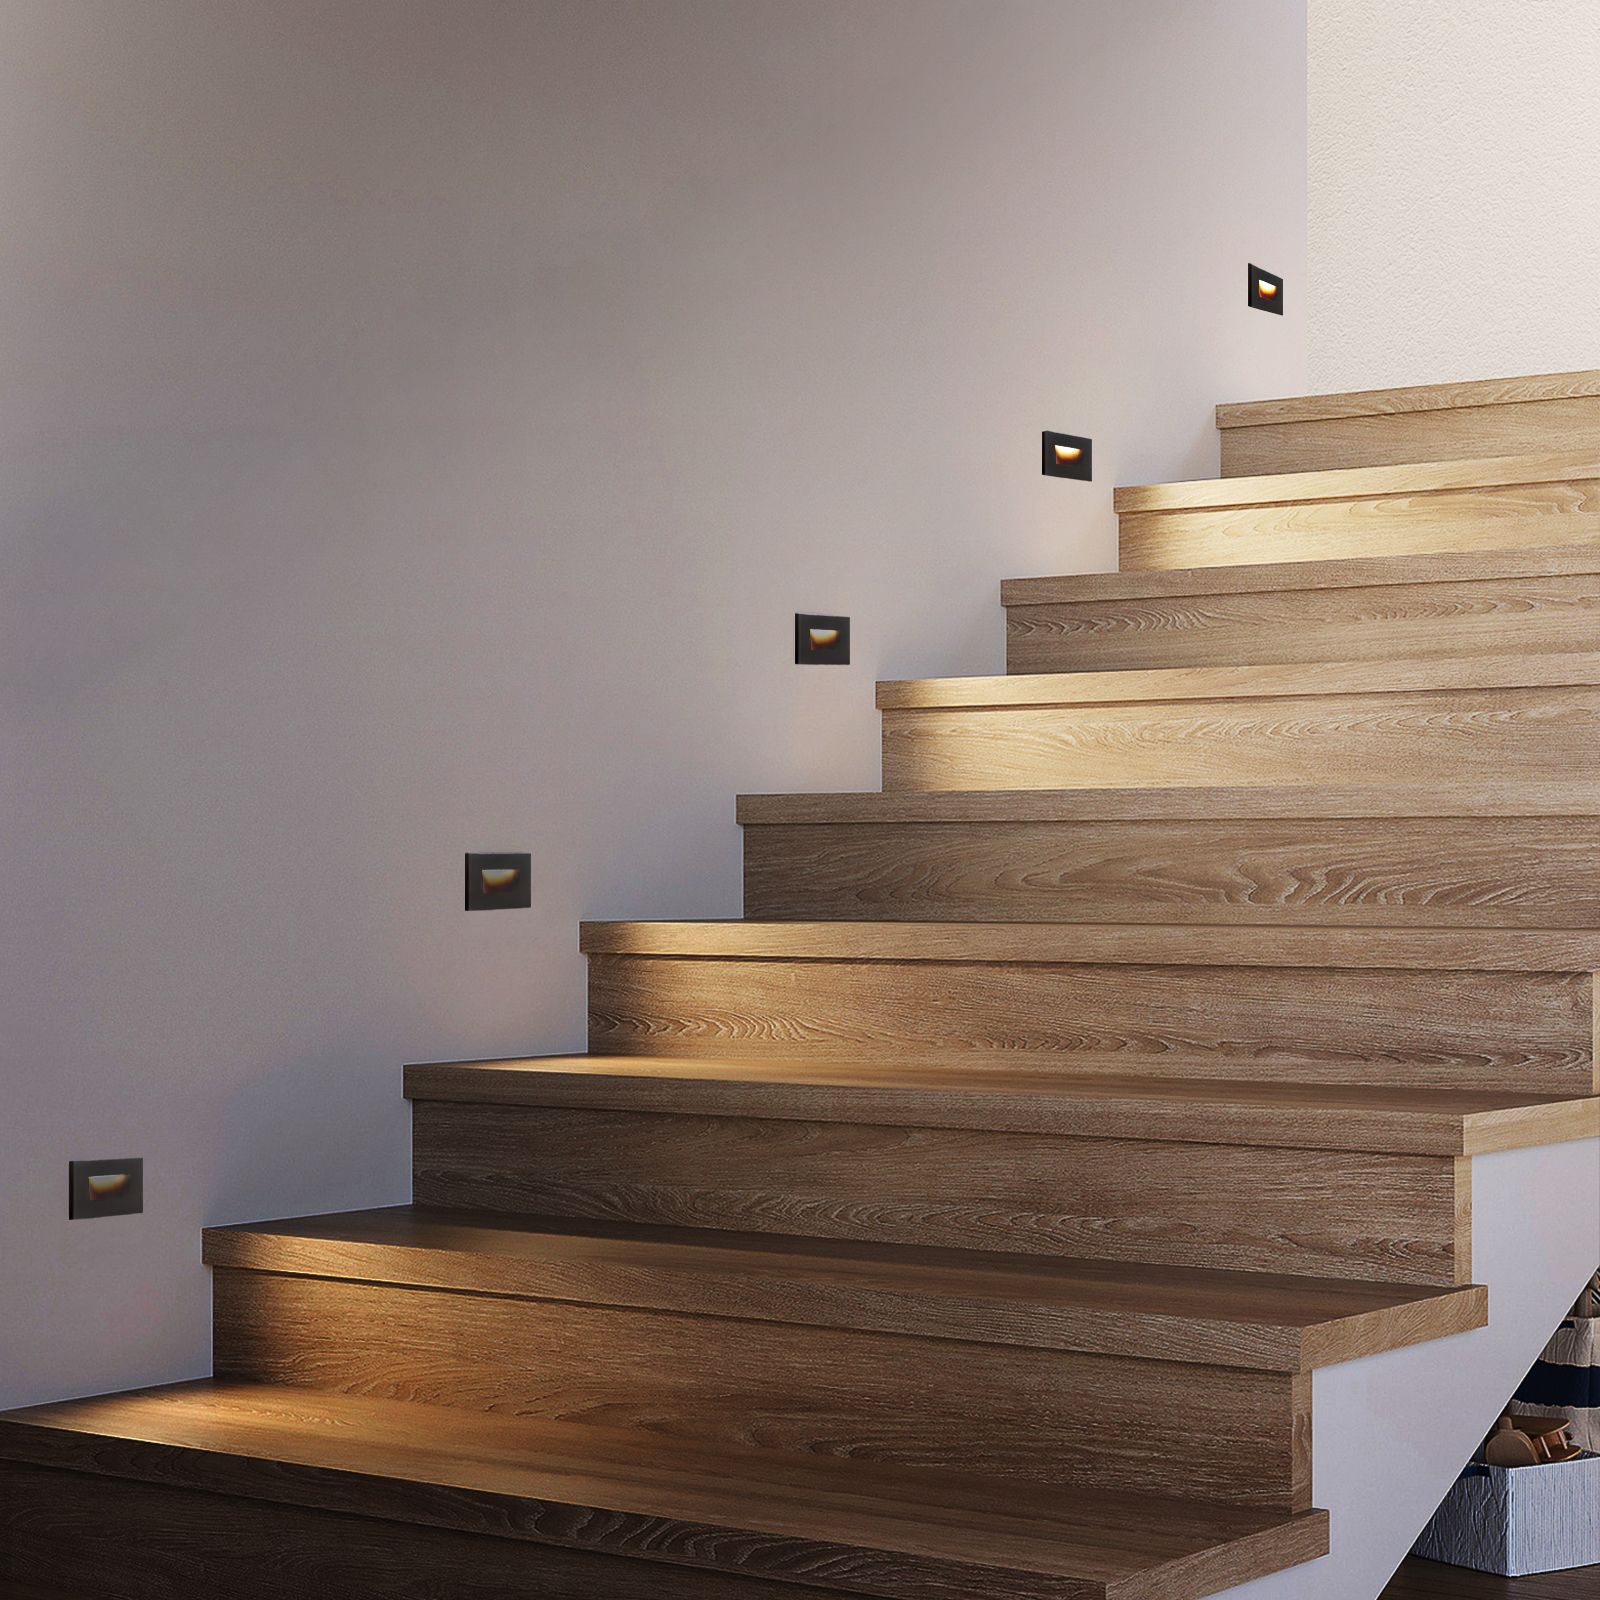 Gardencoin®Harp Deck Stair Light, Etl Listed Indoor Outdoor Step lighting  ，Aluminum Waterproof Staircase Lighting